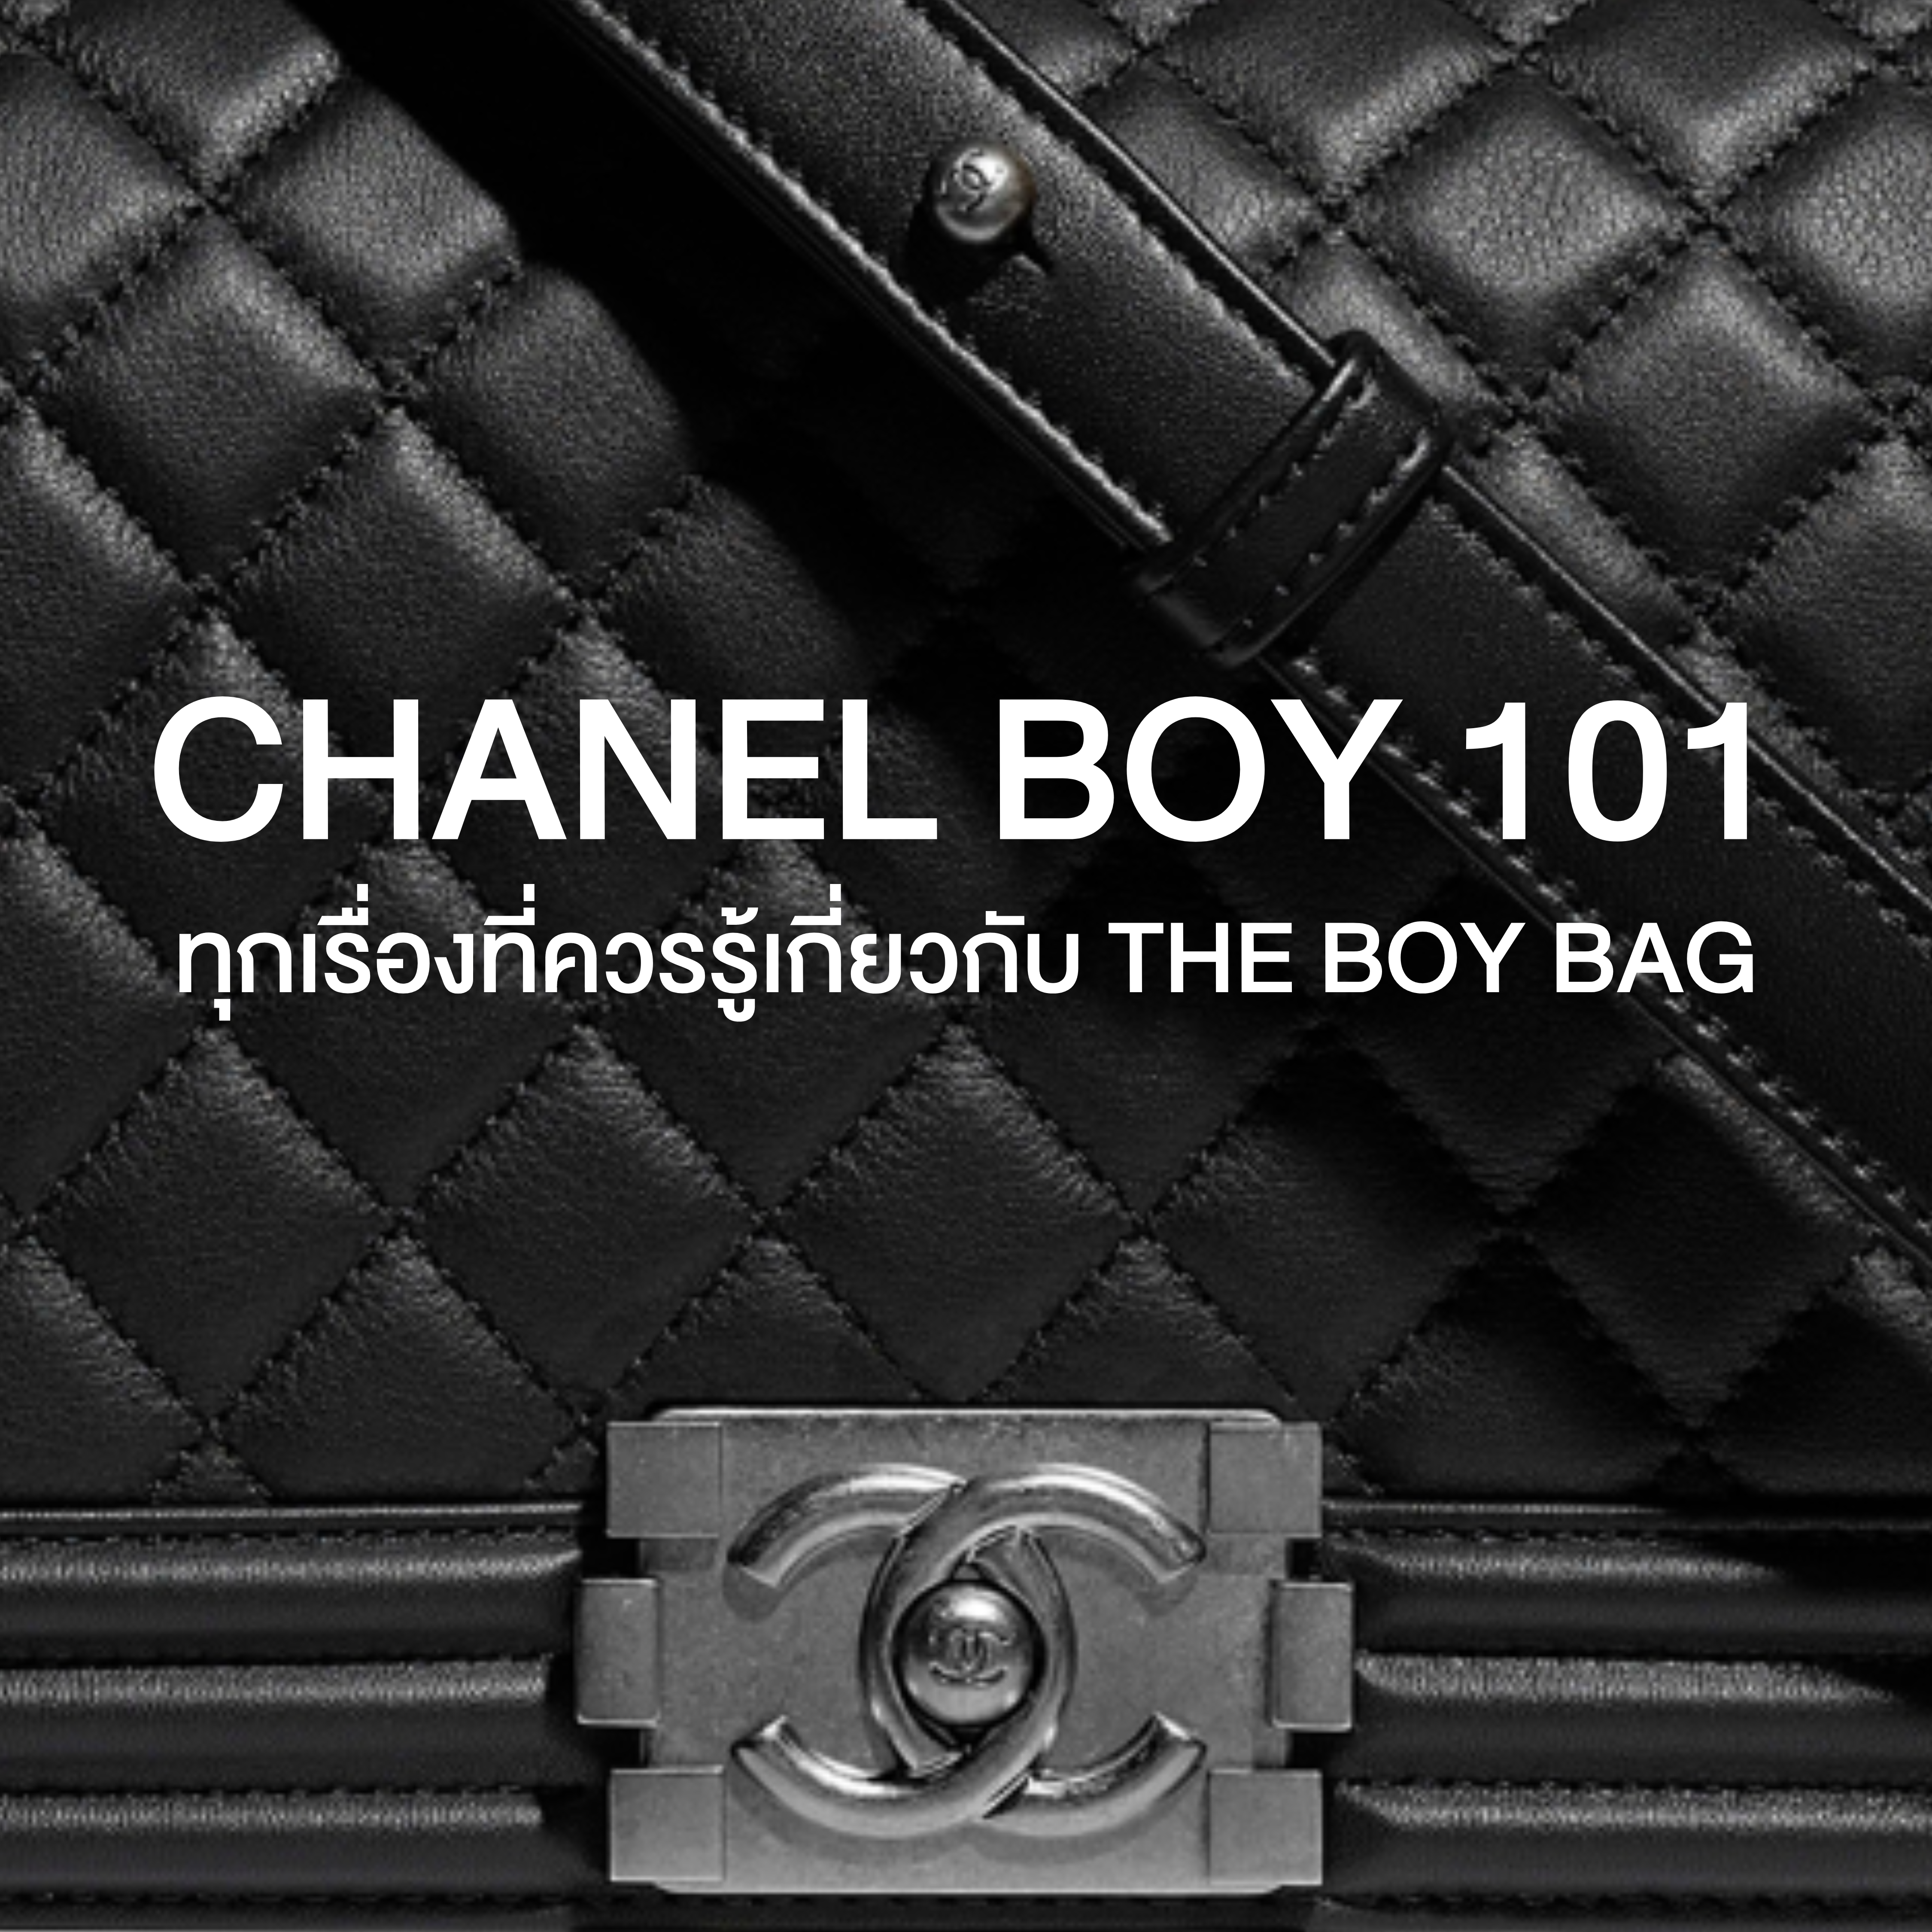 Chanel Boy 101 ทุกเรื่องที่ควรรู้เกี่ยวกับ The Boy Bag